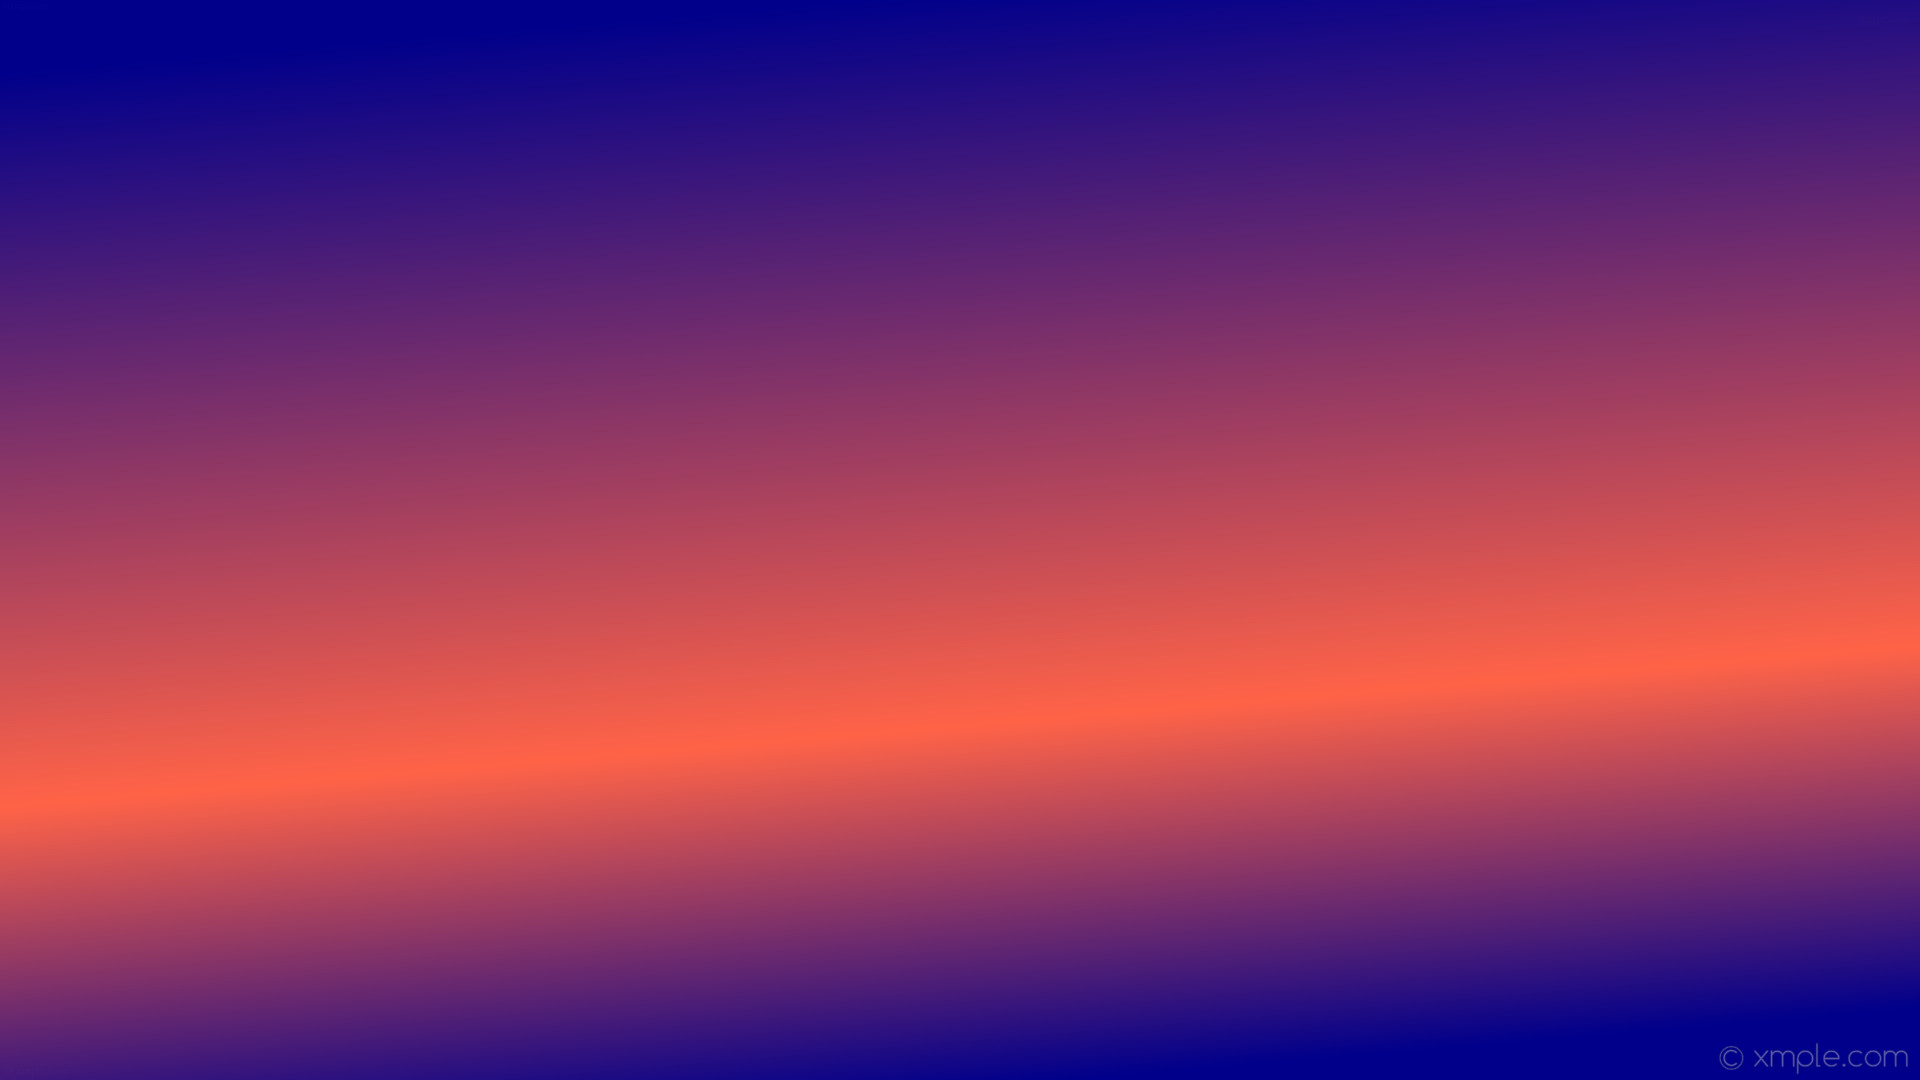 1920x1080 wallpaper linear orange blue gradient highlight dark blue tomato #00008b  #ff6347 285Â° 33